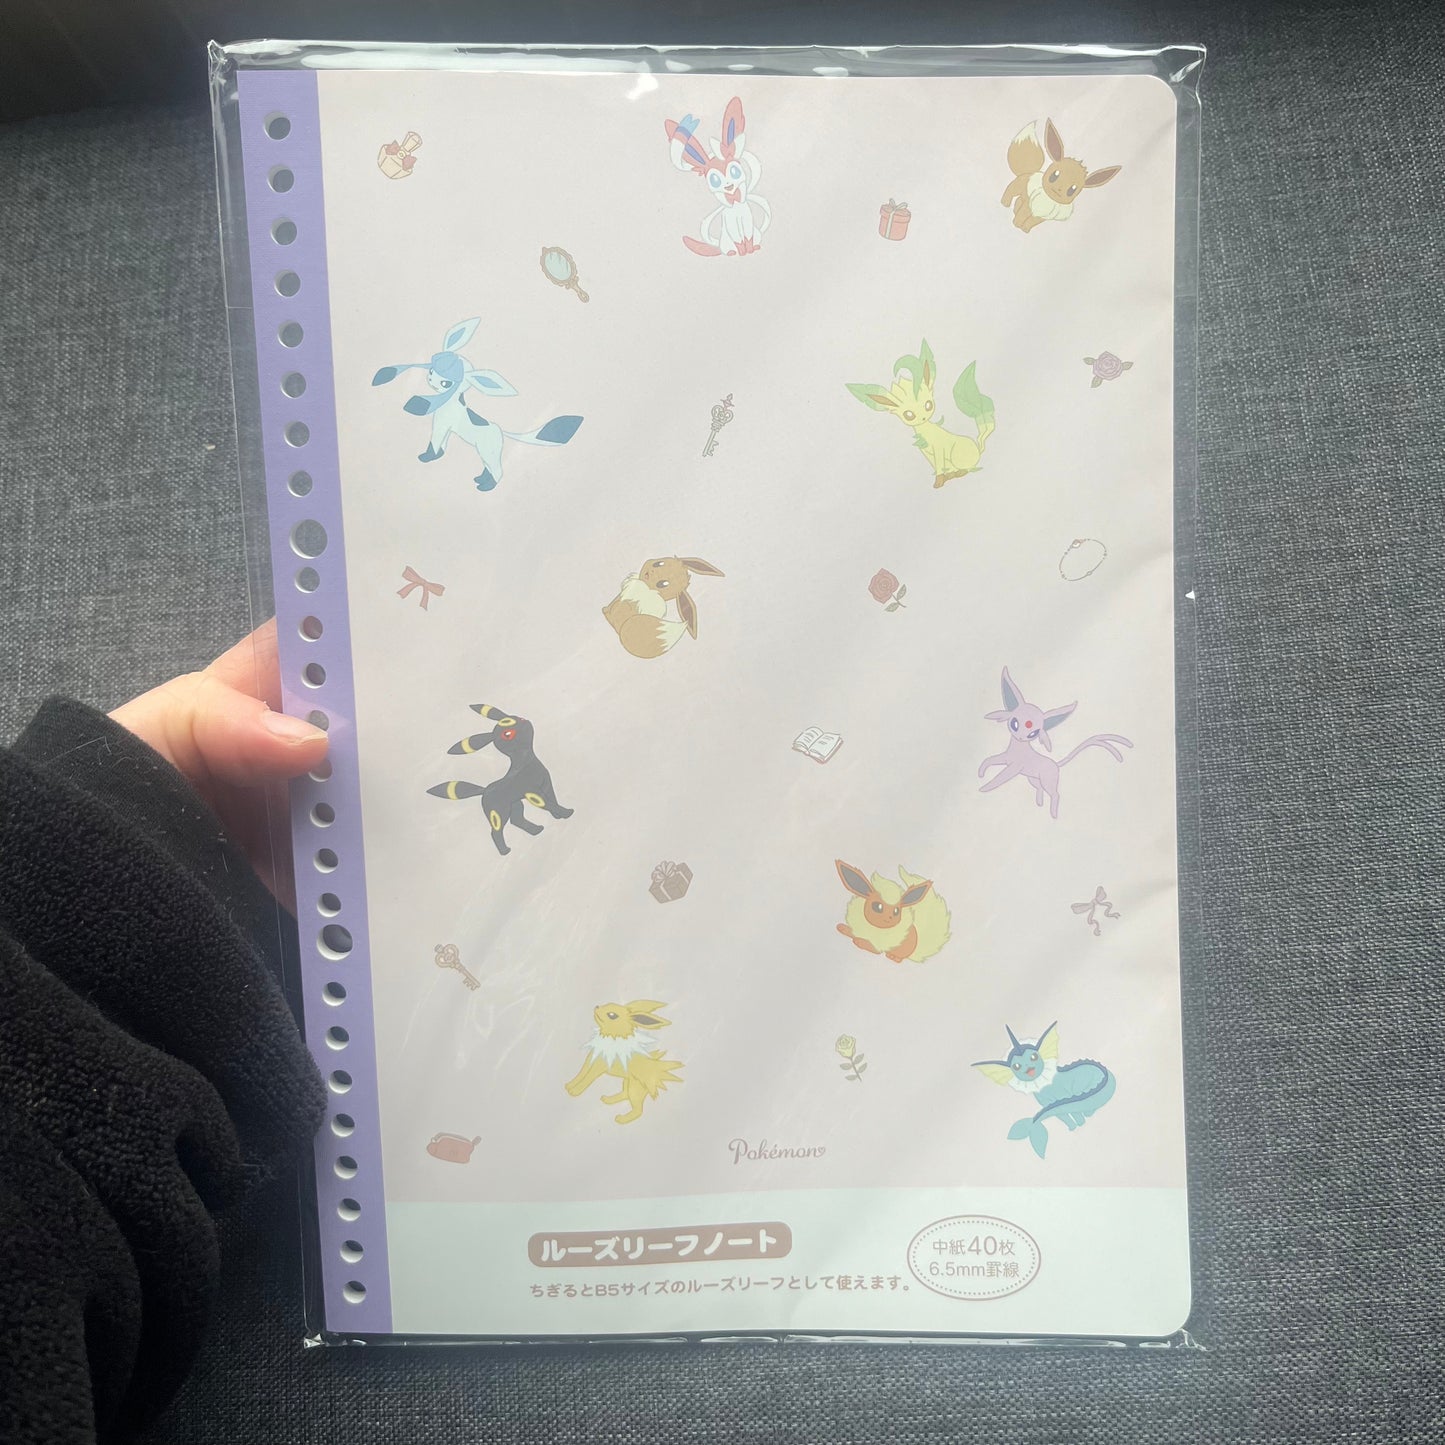 Pokémon Eeveelutions A4 Notebook